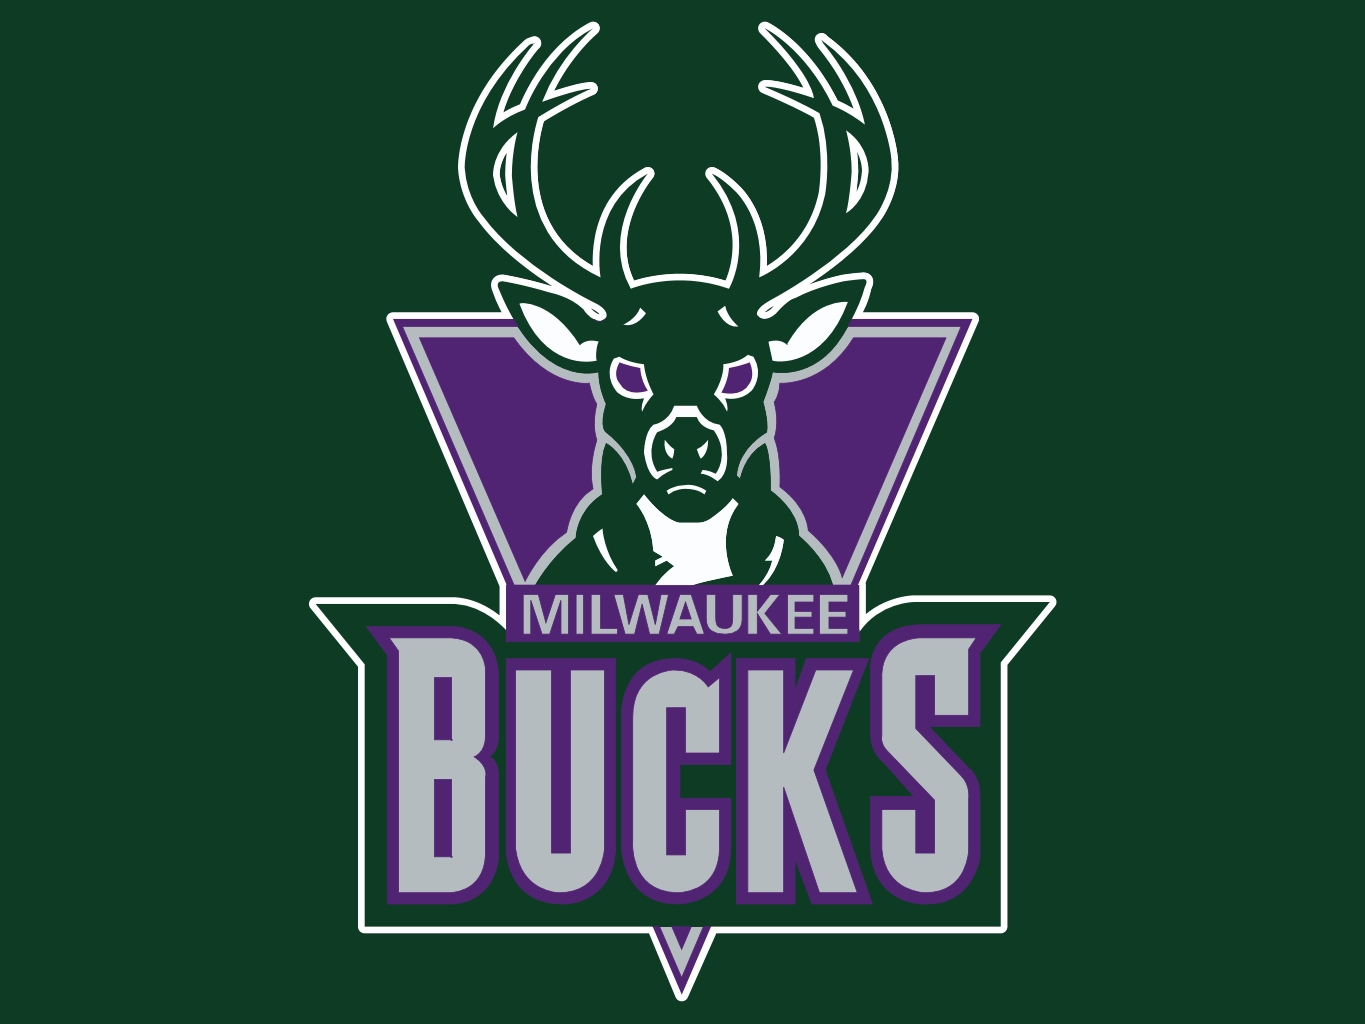 Milwaukee Bucks scores